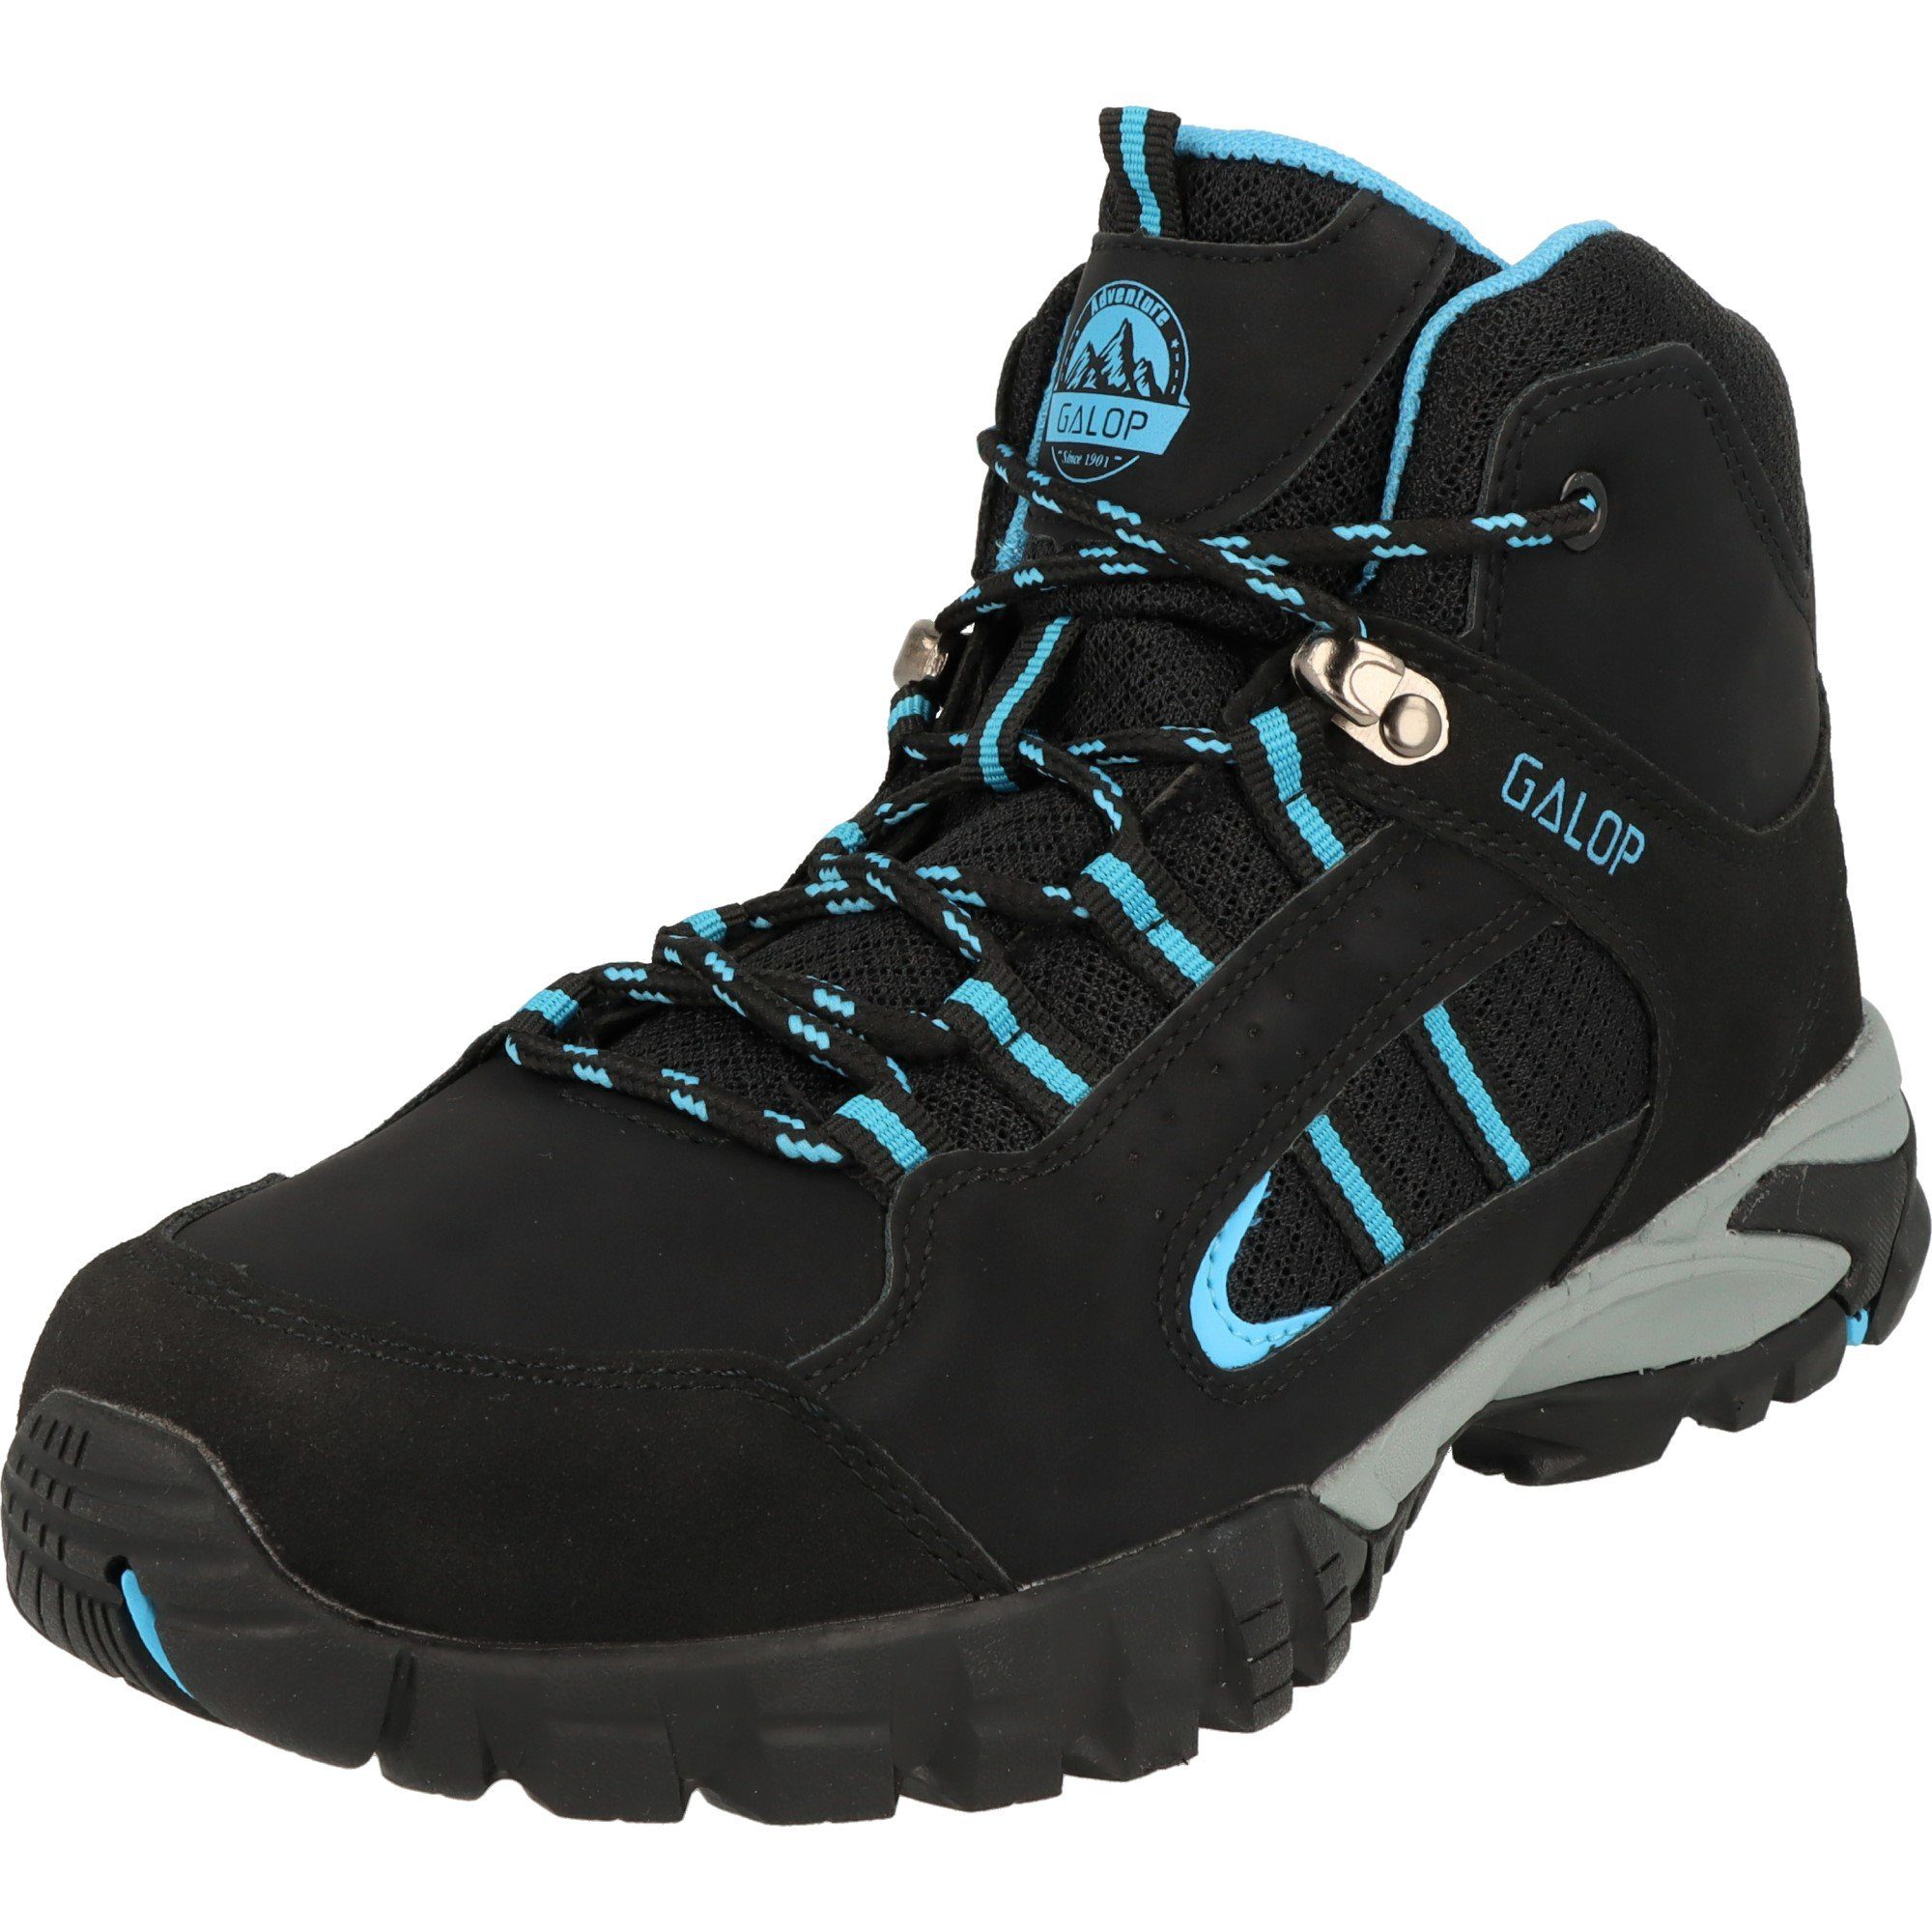 Galop Damen Schuhe Trekking Boots Stiefel Schnürer L34501.802 Schwarz  Trekkingschuh